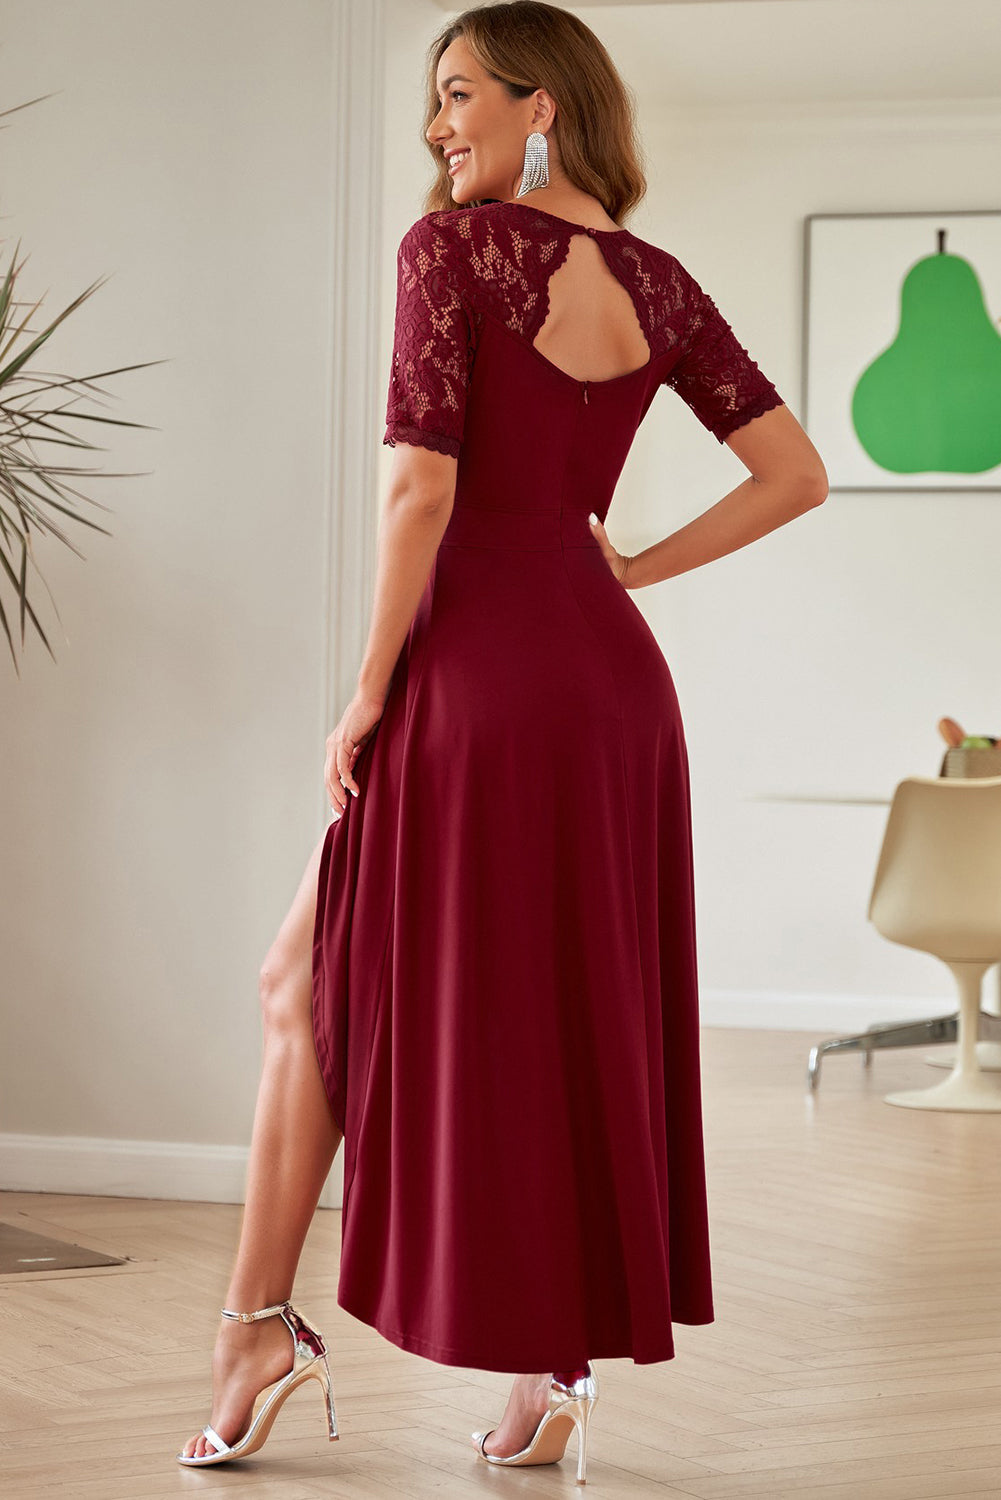 Lace Cutout V-Neck Short Sleeve Dress